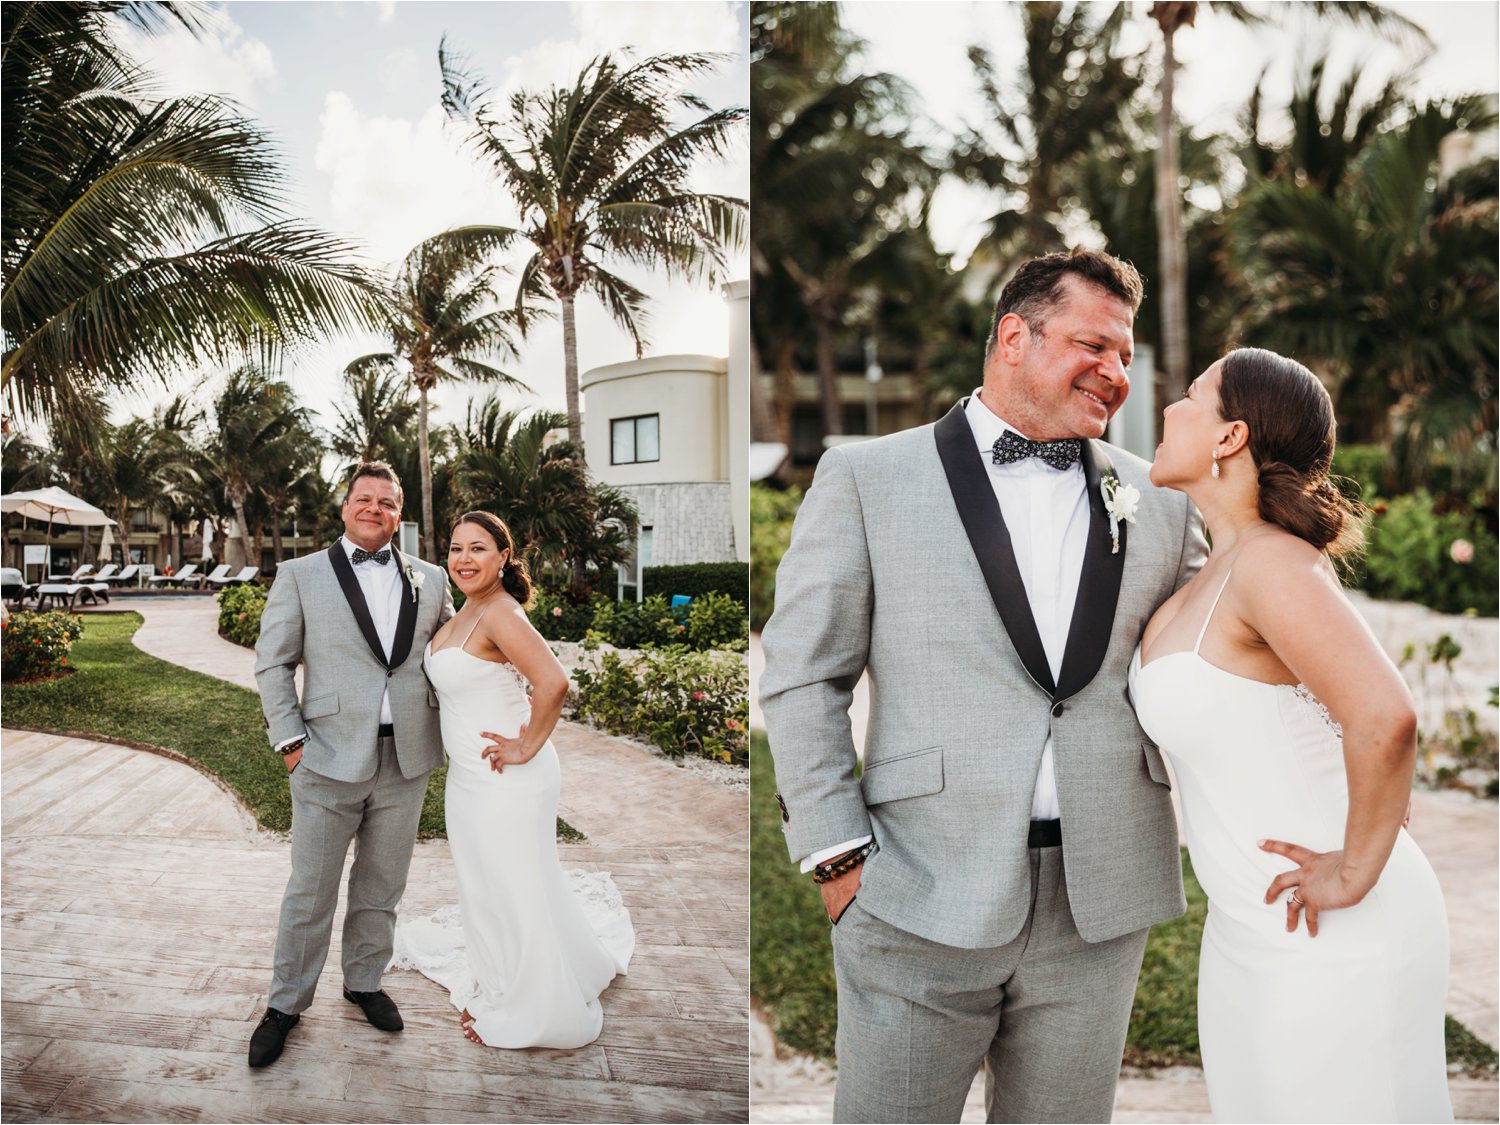  images by feliciathephotographer.com | destination wedding photographer | mexico | tropical | fiji | venue | azul beach resort | riviera maya | bridal portraits | kiss on the cheek | lace backed dress | grey suit | romantic | 